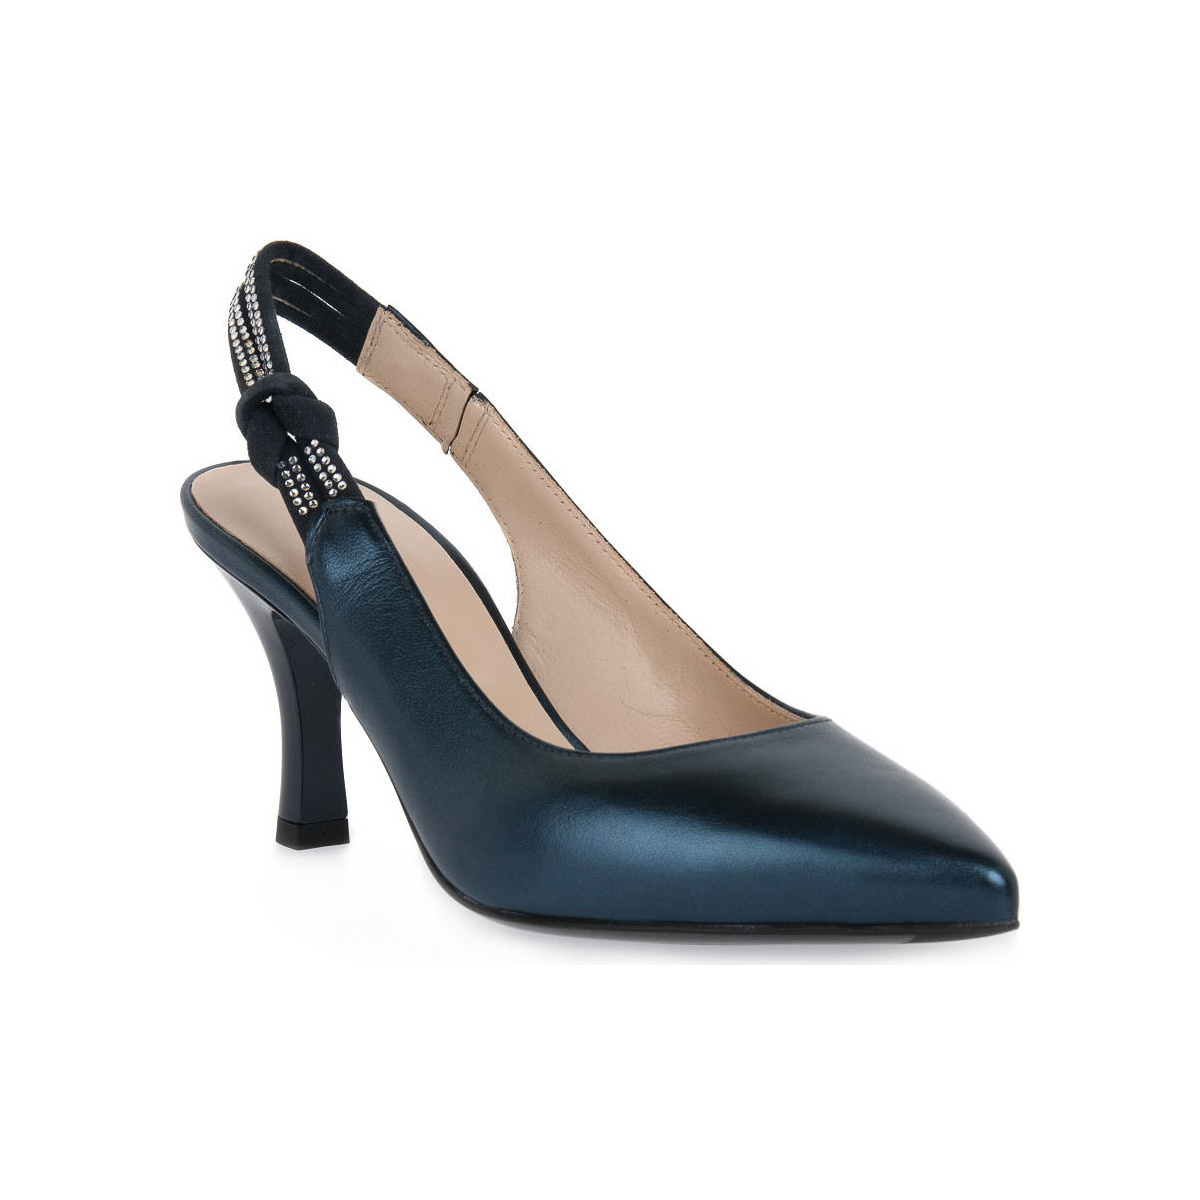 Chaussures Femme Escarpins NeroGiardini NERO GIARDINI 201 LAMINATO OCEANO Bleu